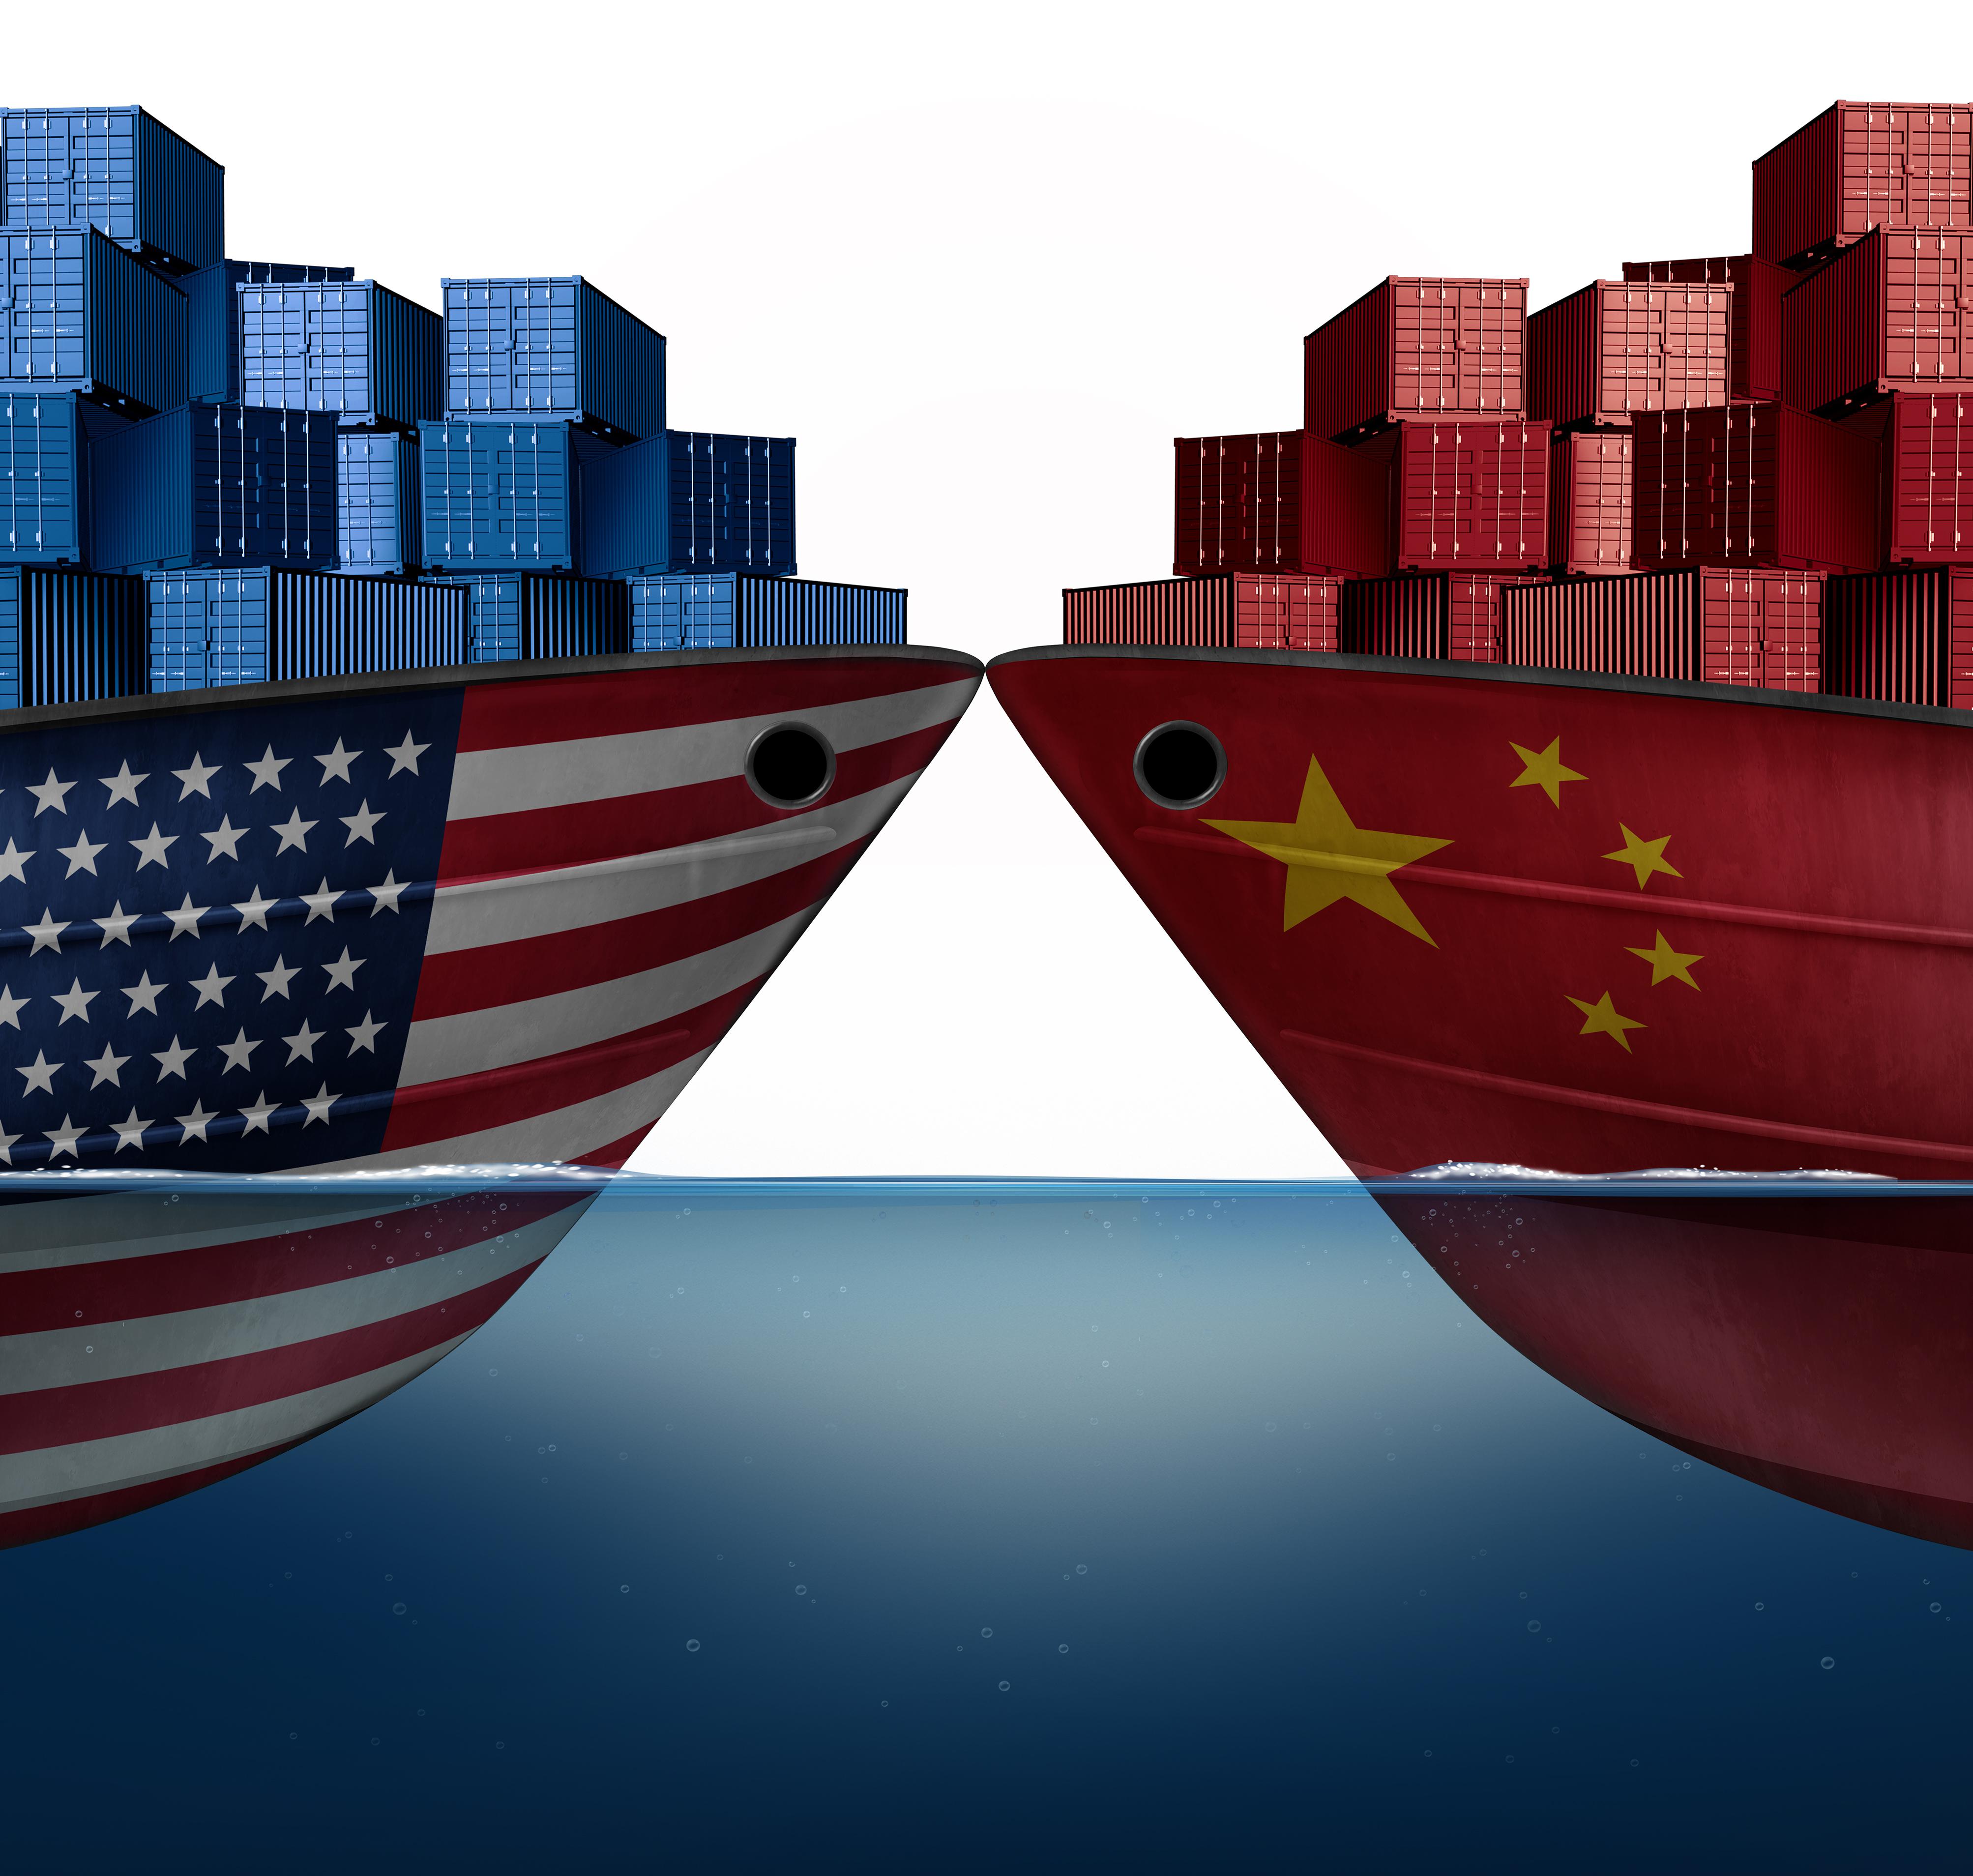 U.S and China ships bumping together